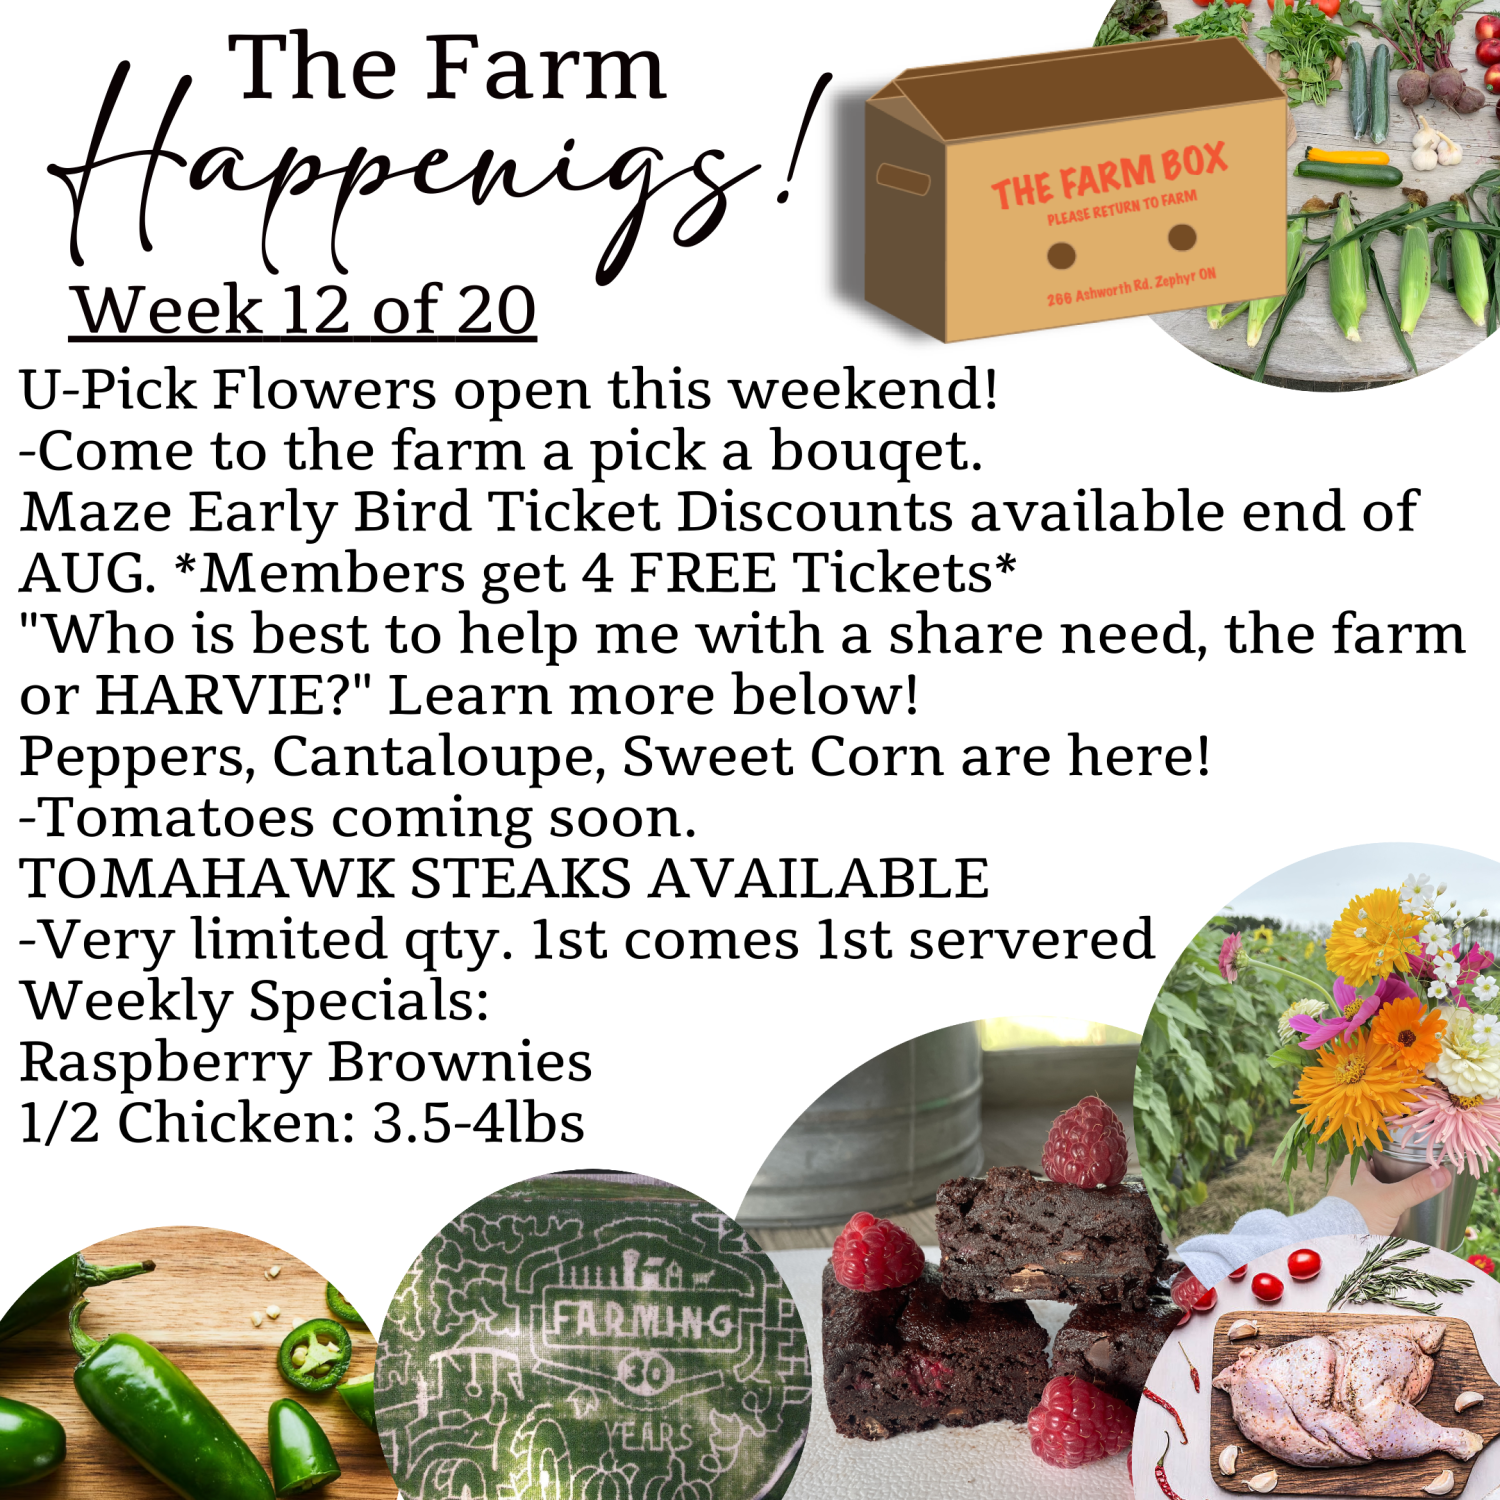 Next Happening: "The Farm Box"-Coopers CSA Farm Farm Happenings Week 12